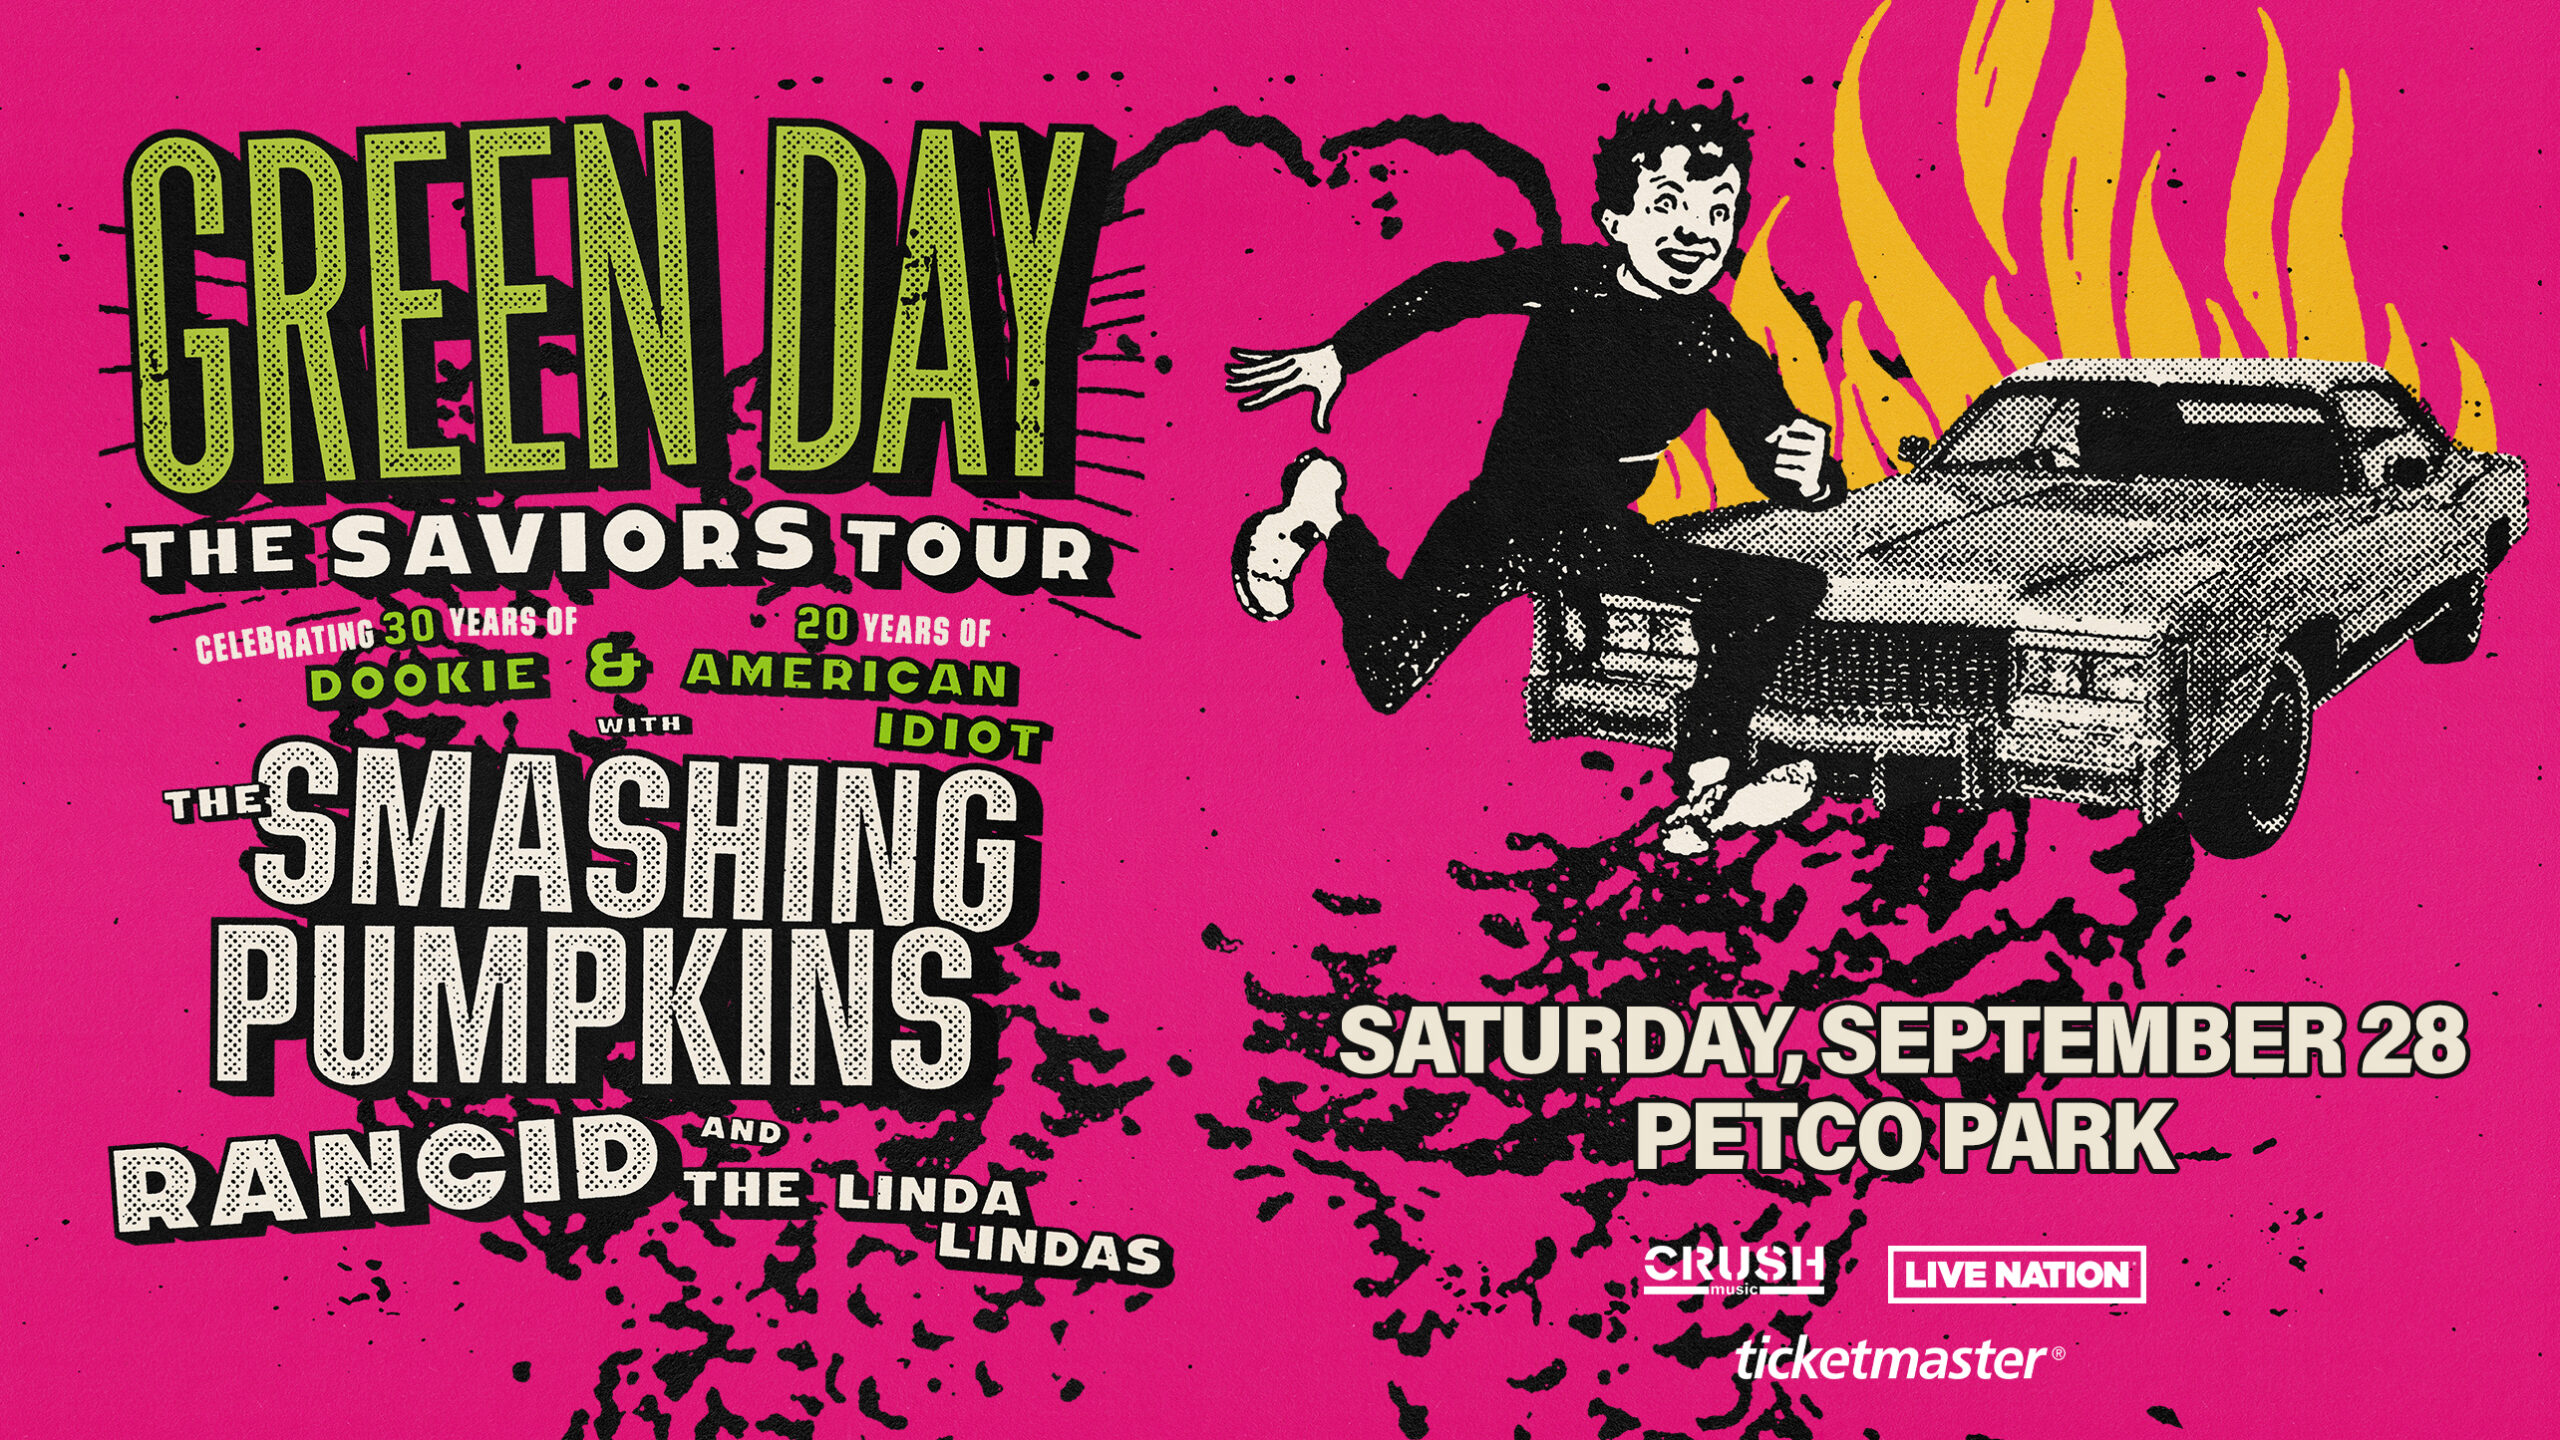 Green Day The Saviors Tour Petco Park Events